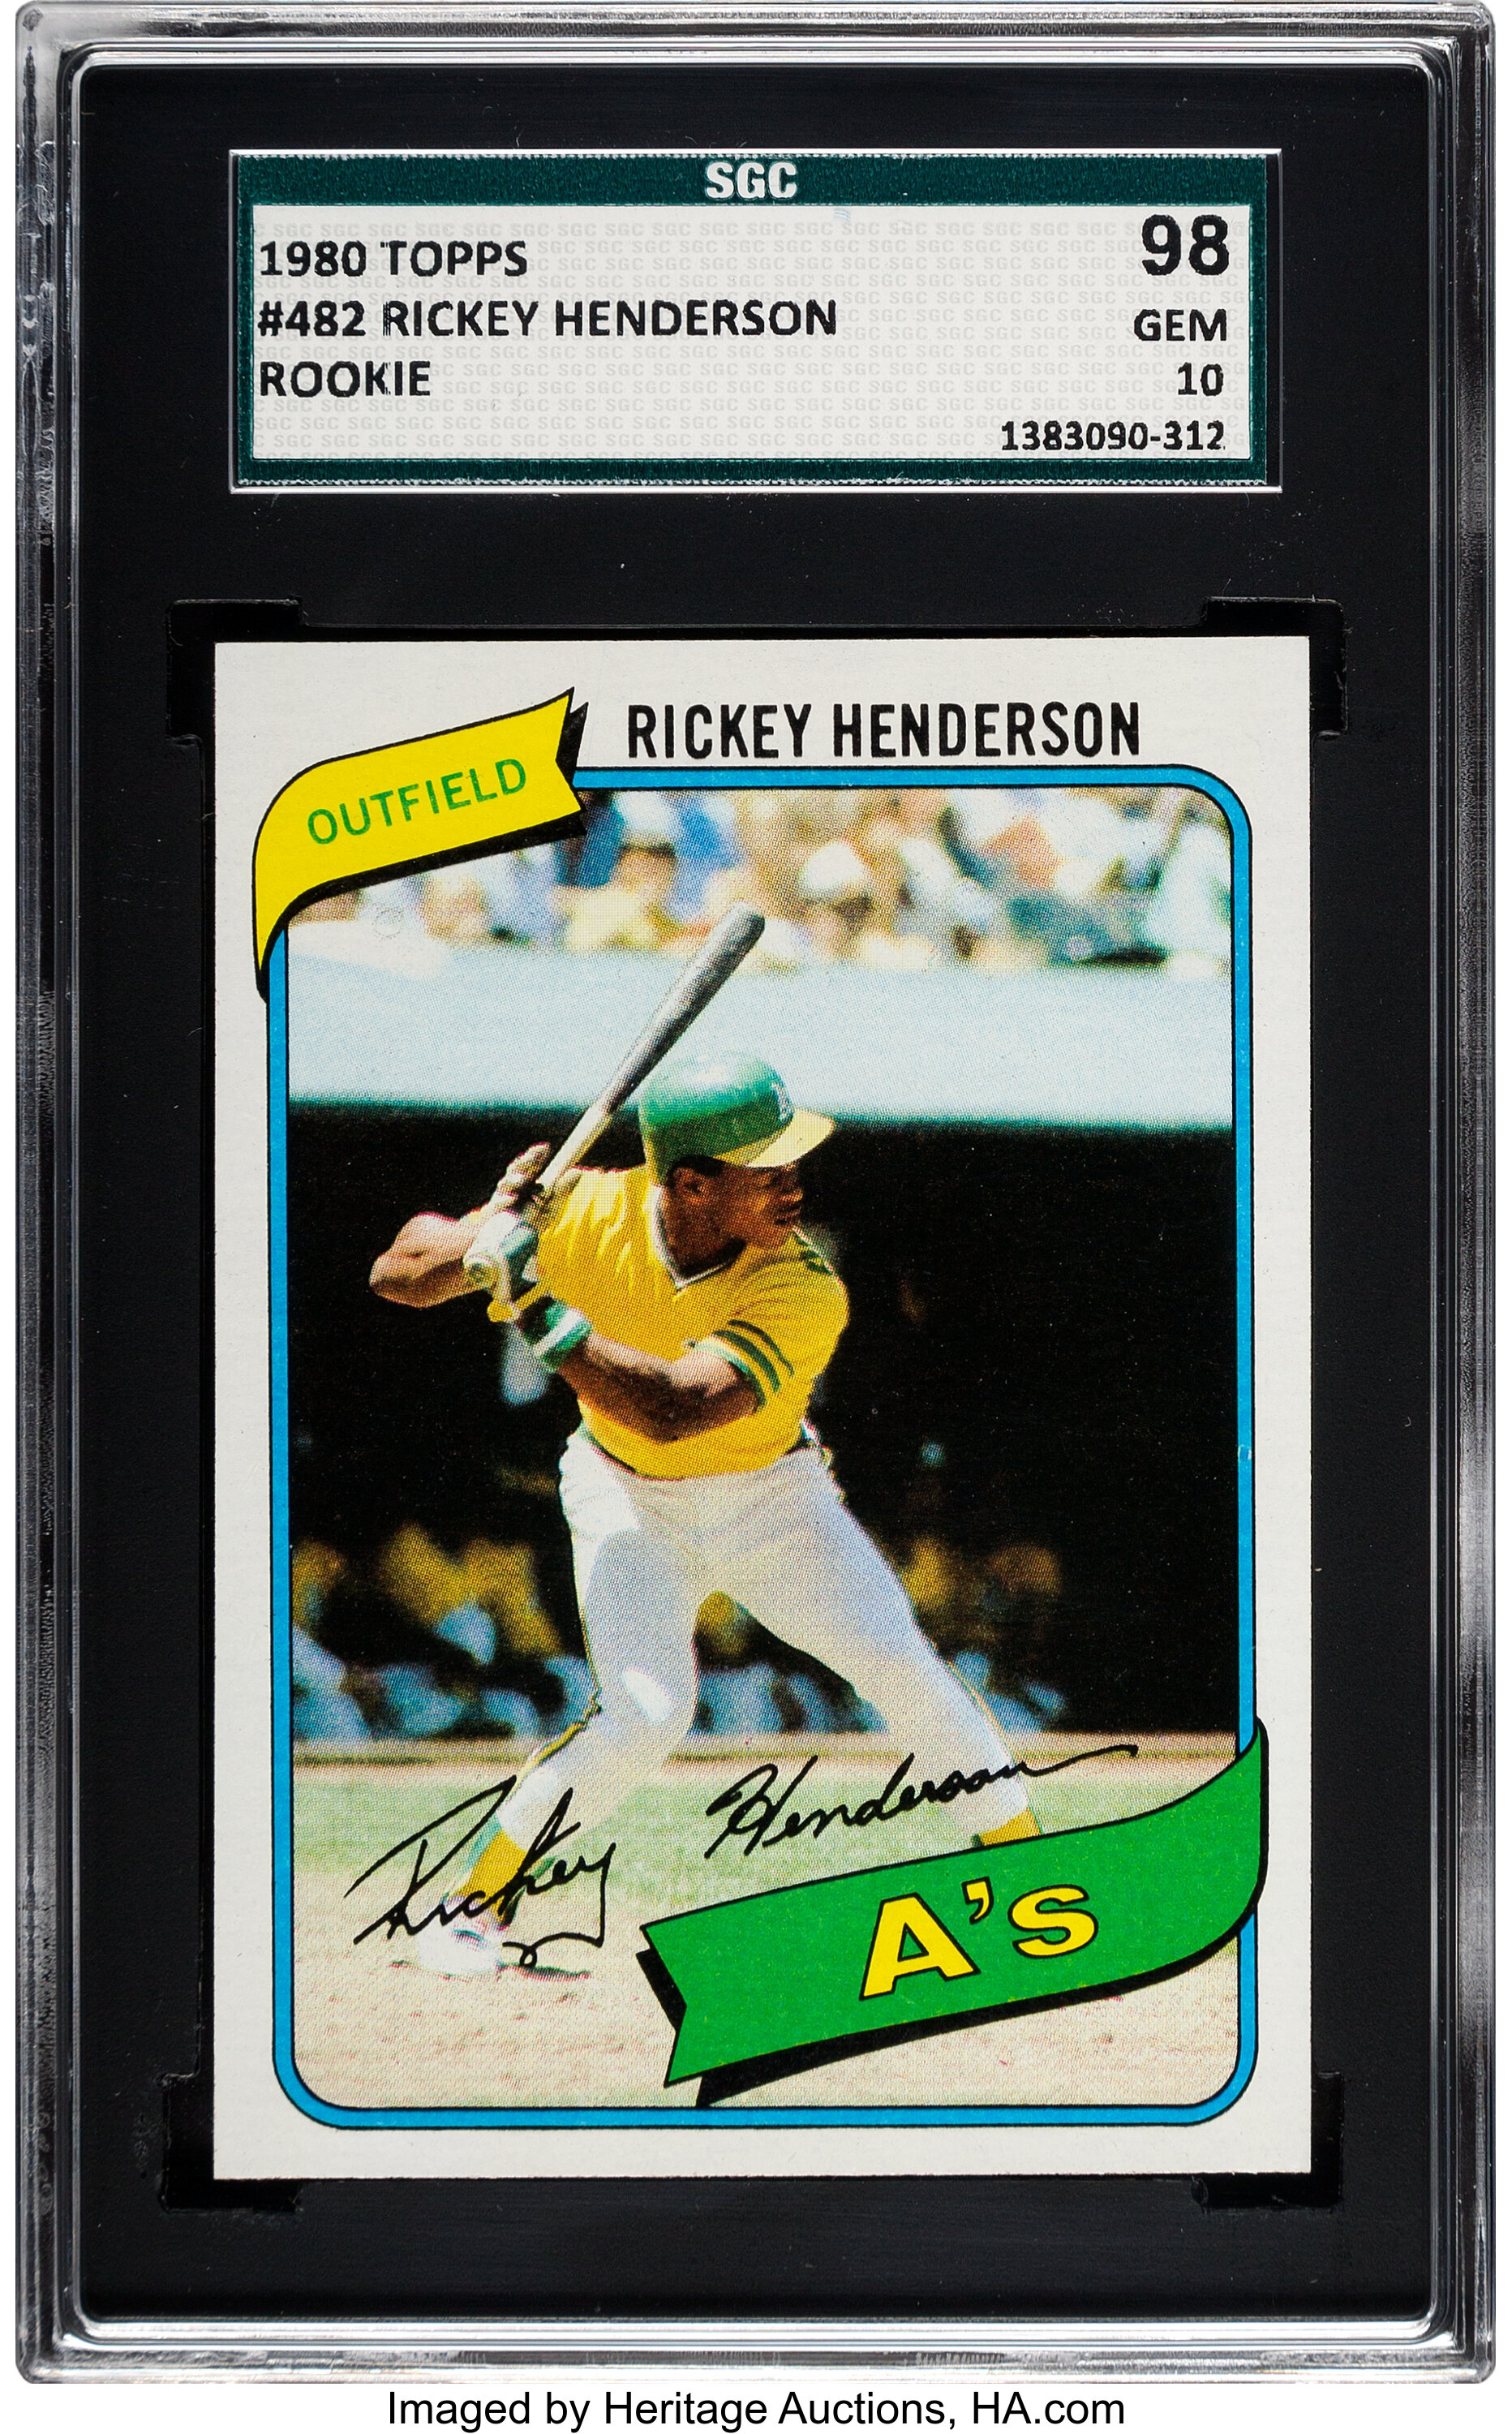 8 Great 1980 Topps Baseball Cards Beyond Rickey Henderson